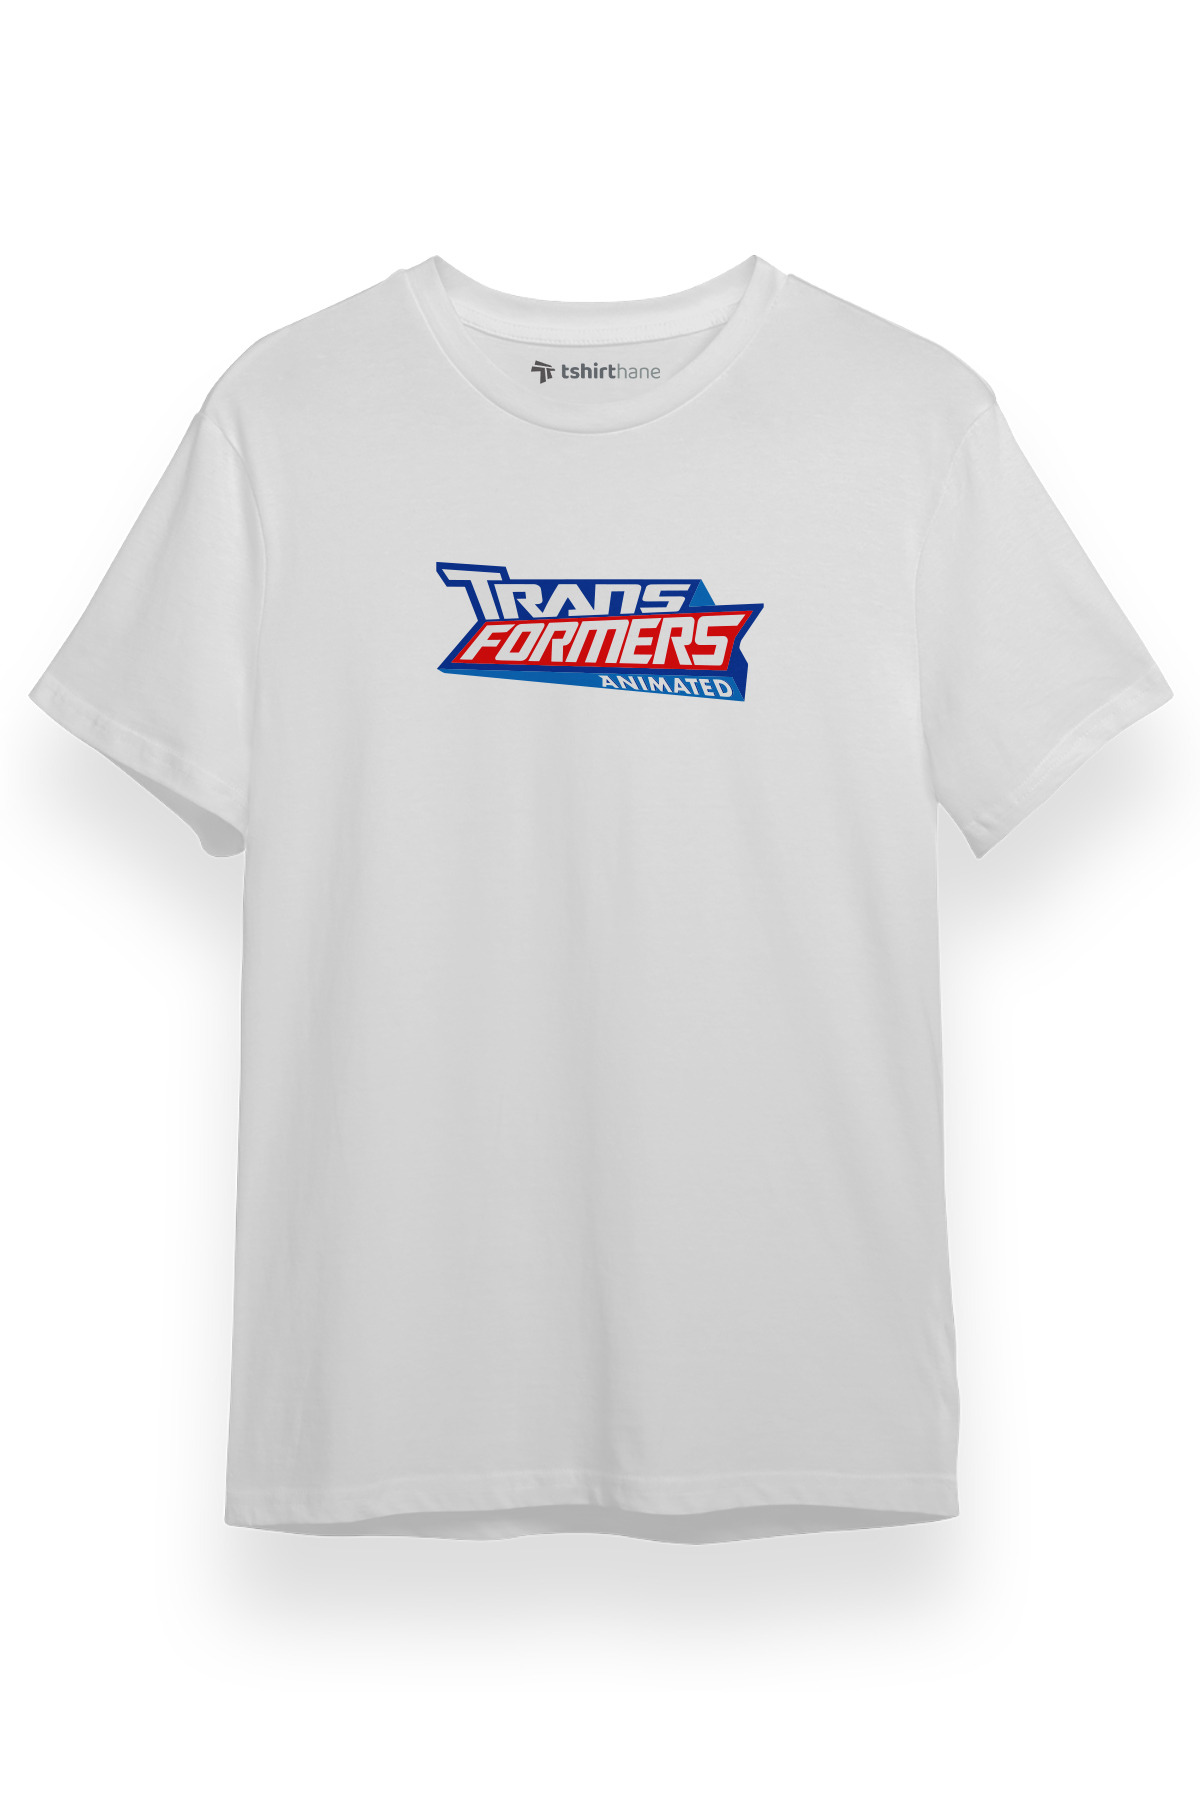 Transformers Animated Logo Beyaz Kısa kol Erkek Tshirt